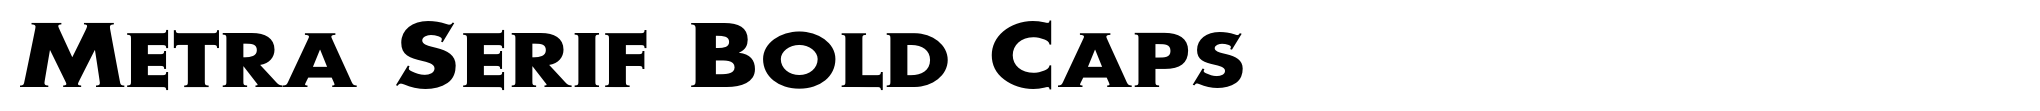 Metra Serif Bold Caps image